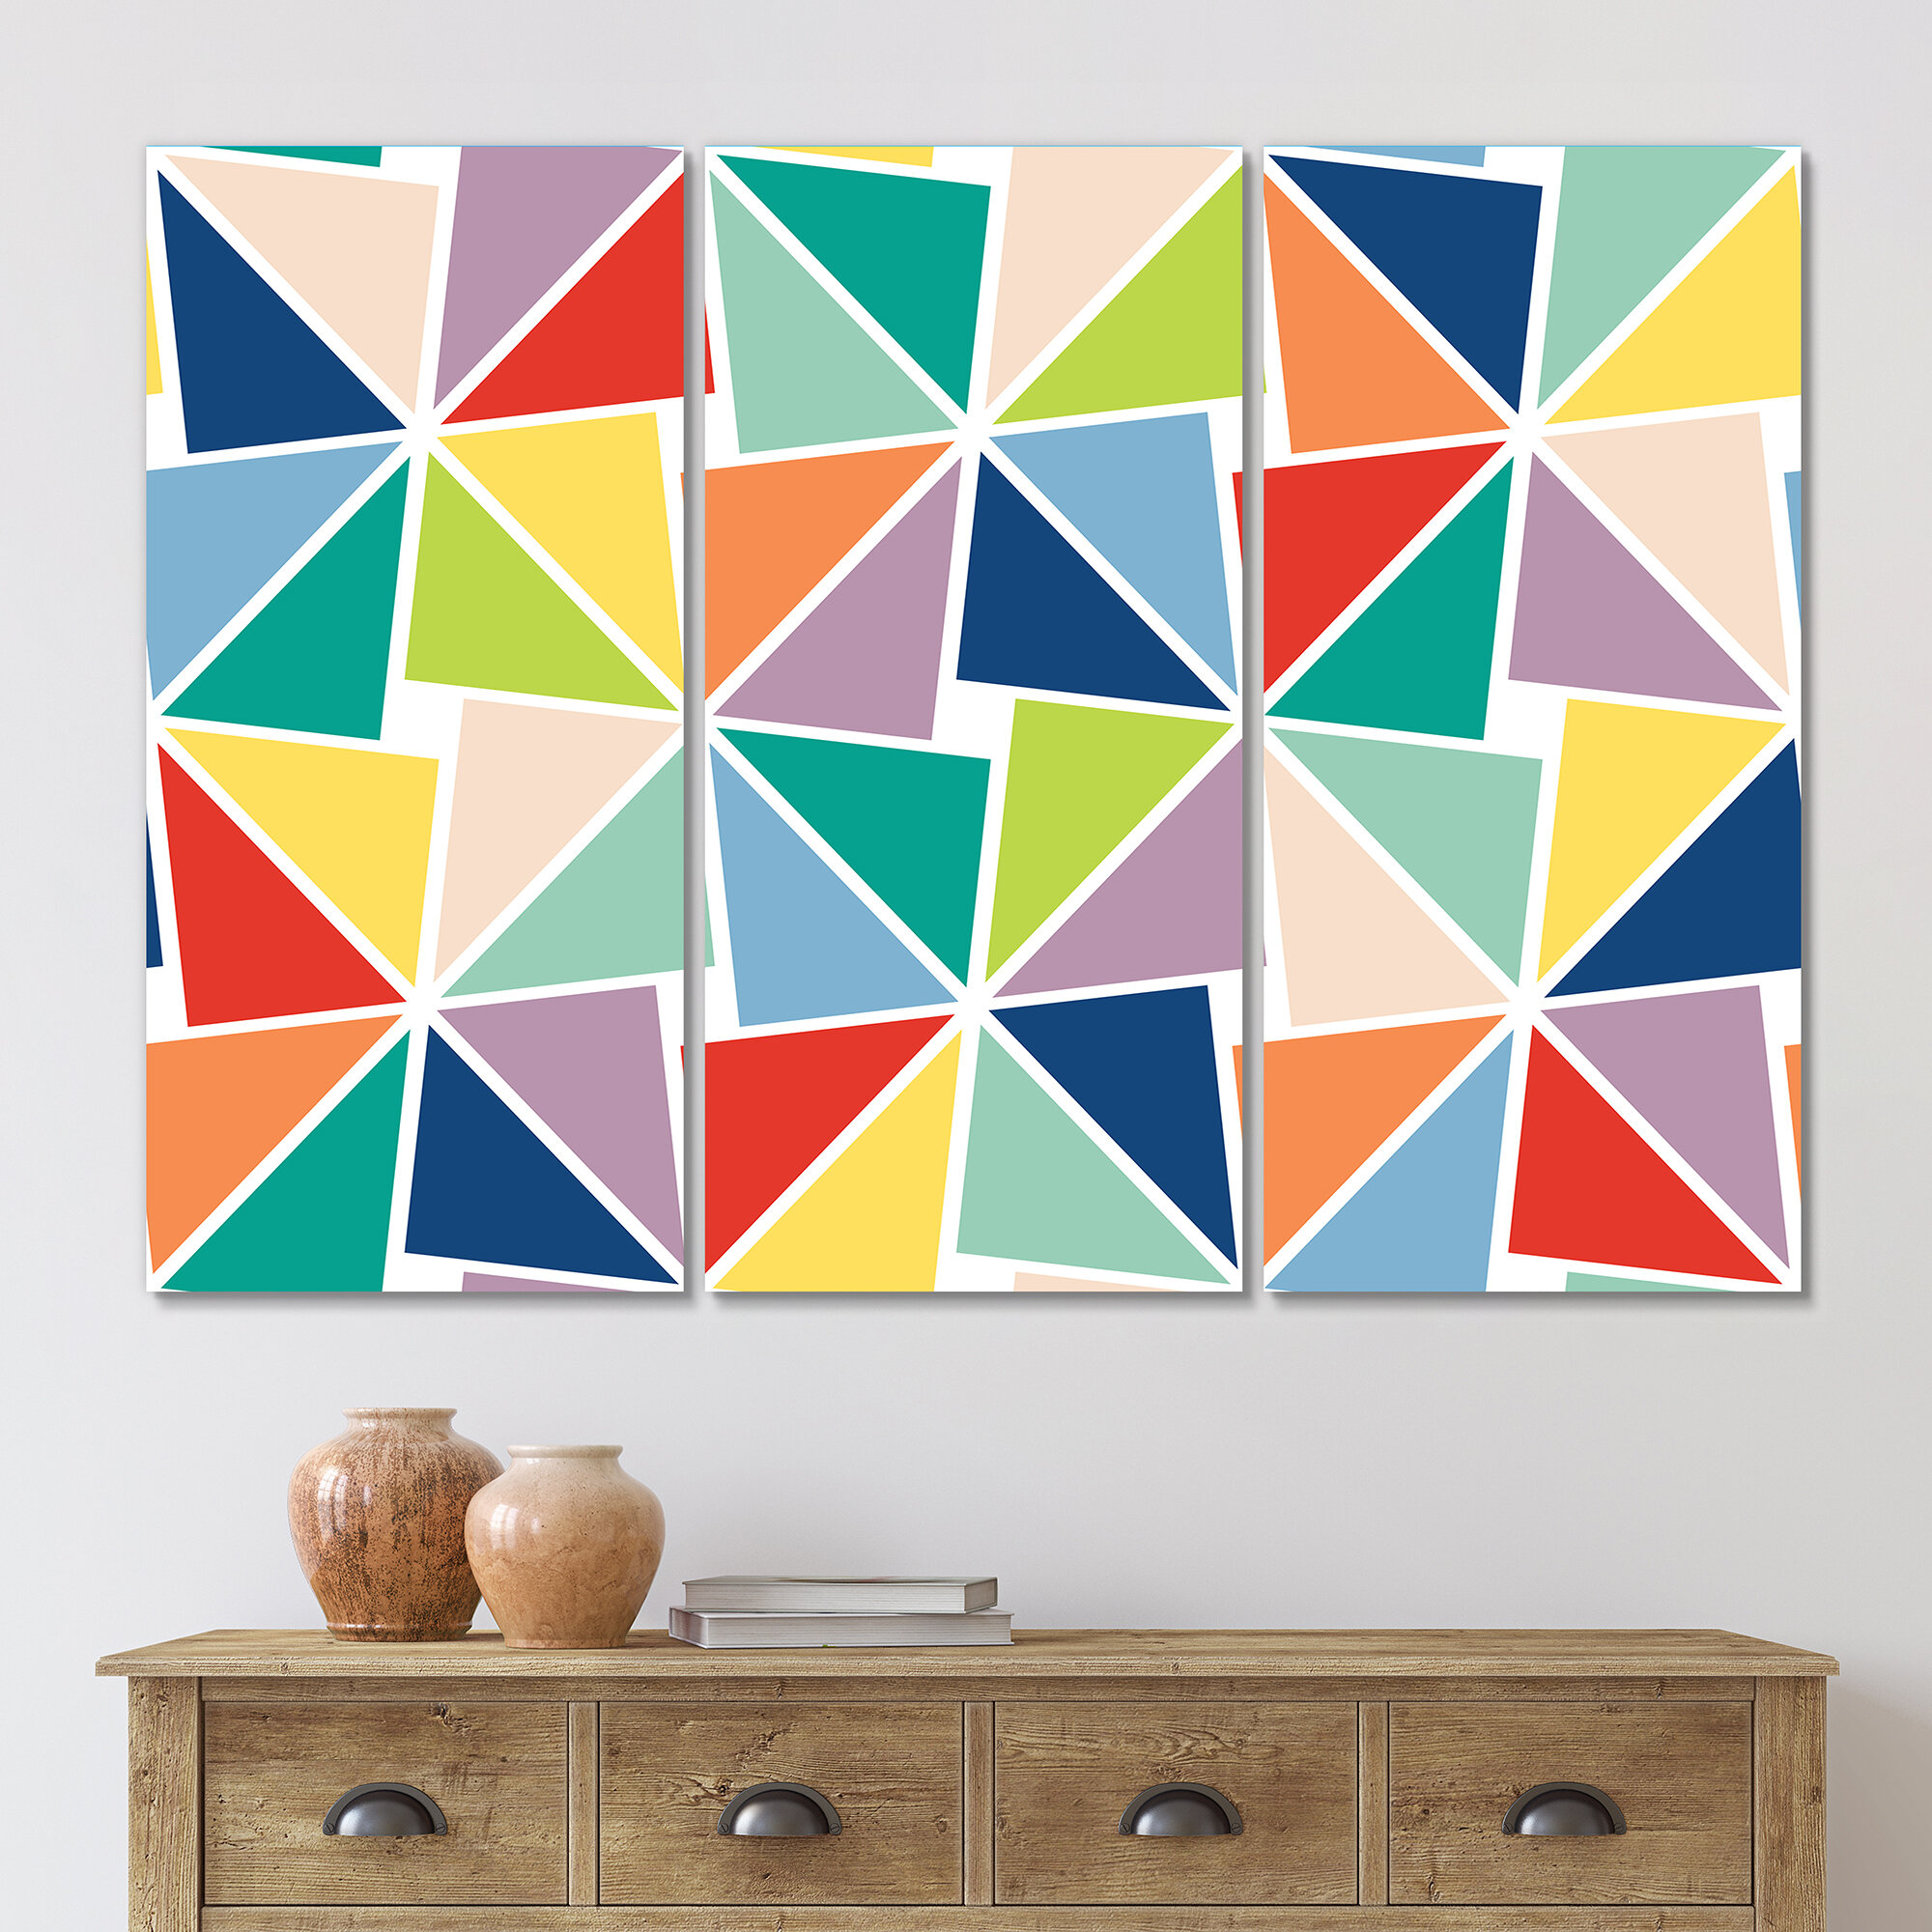 Triangle Art Prints to Match Any Home's Decor